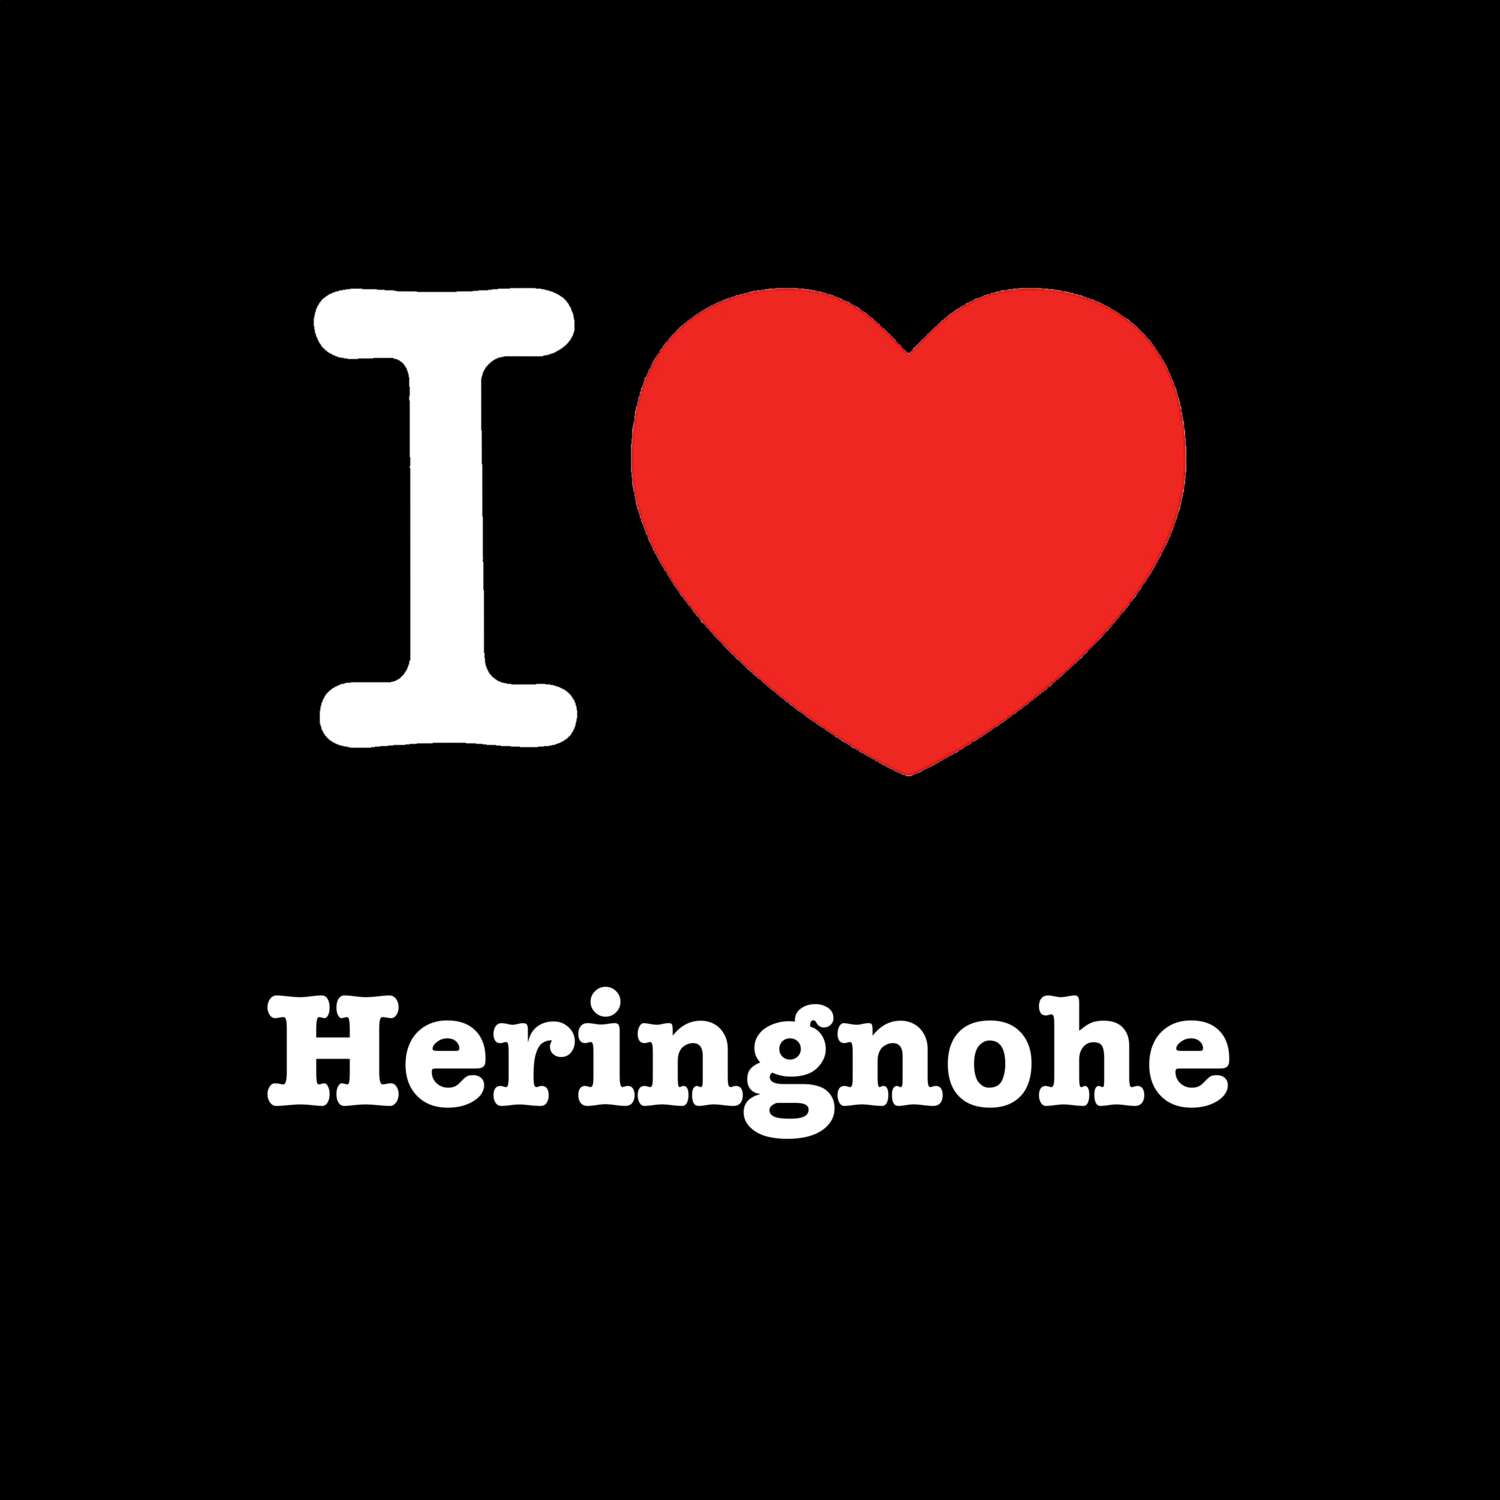 Heringnohe T-Shirt »I love«